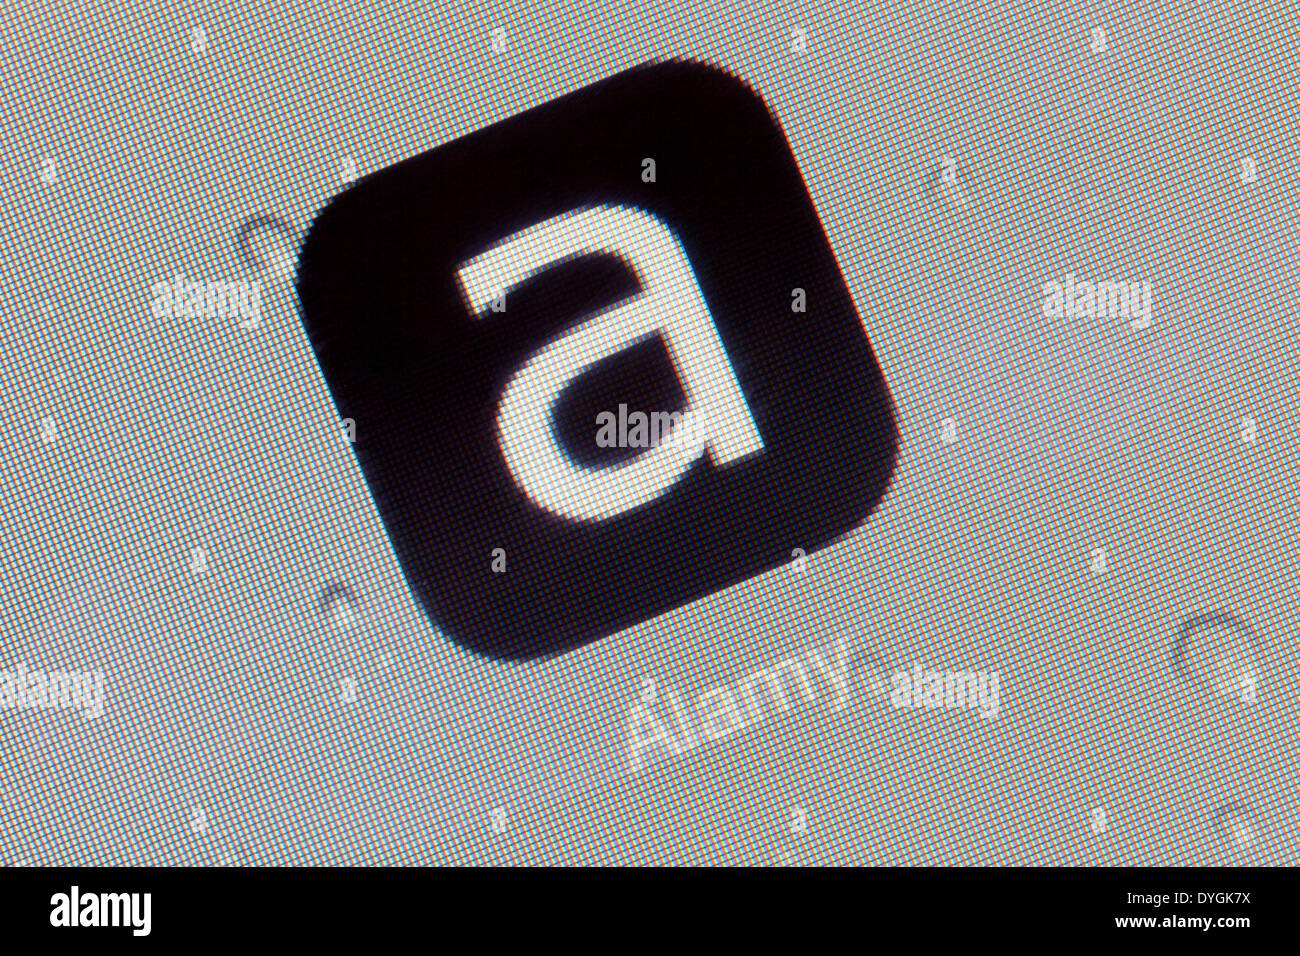 Alamy app logo icon on iPad apps logos icons Stock Photo